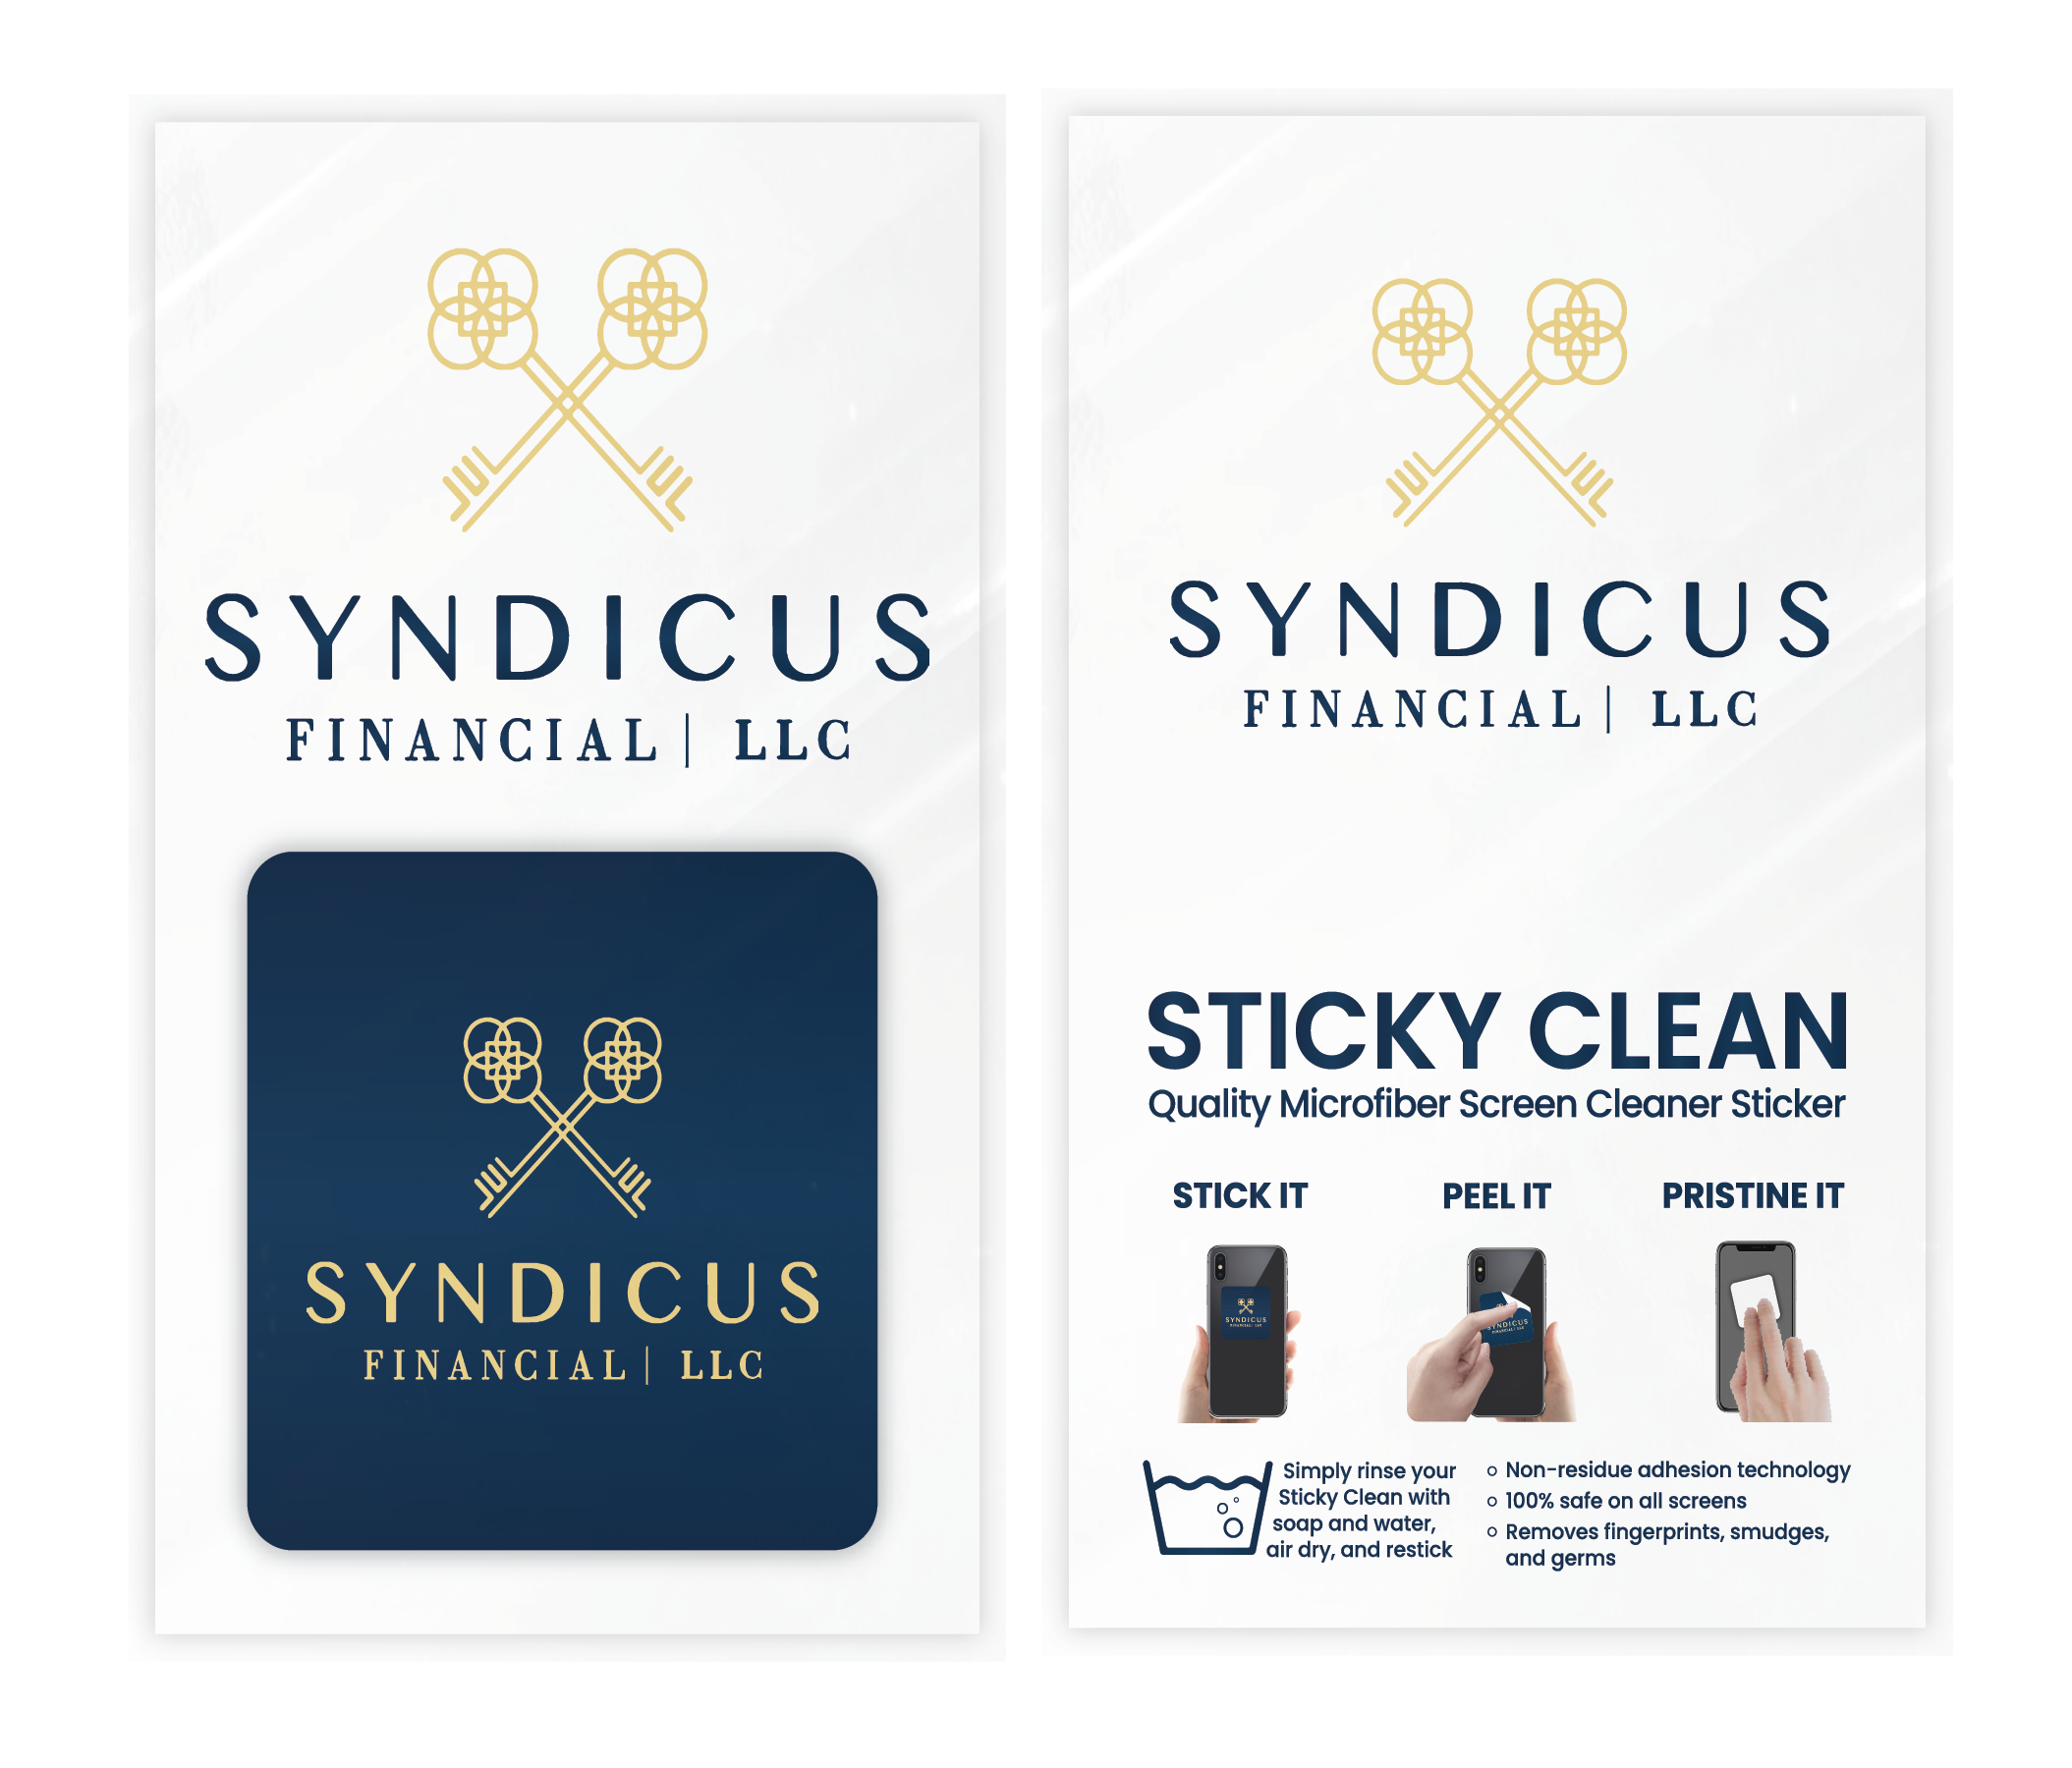 Syndicus Custom Microfiber Screen Cleaner Sticker by Pristine Screens